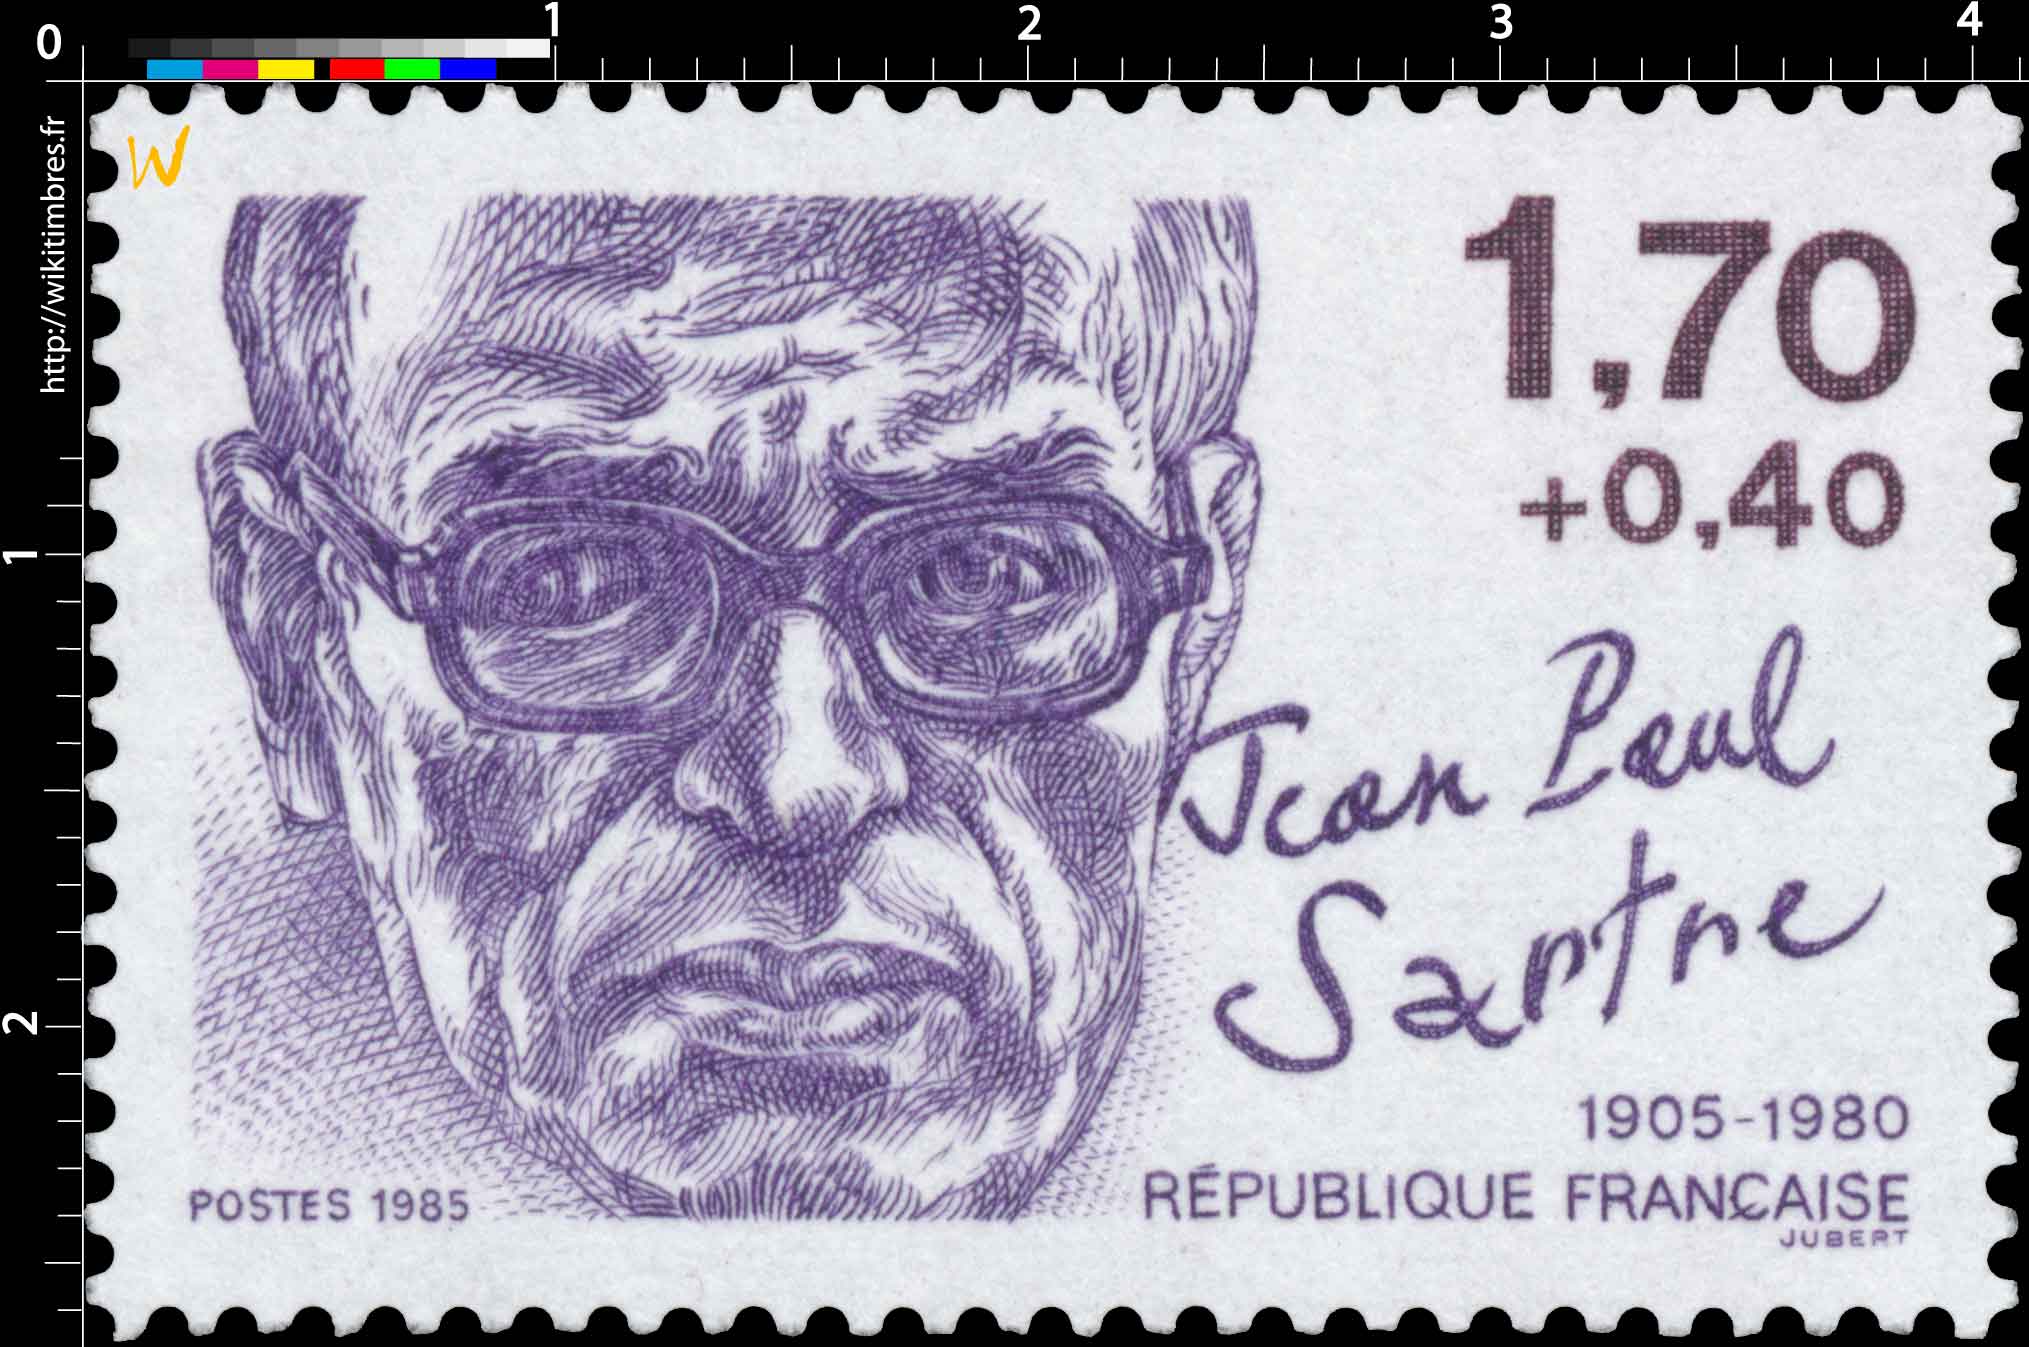 1985 Jean Paul Sartre 1905-1980